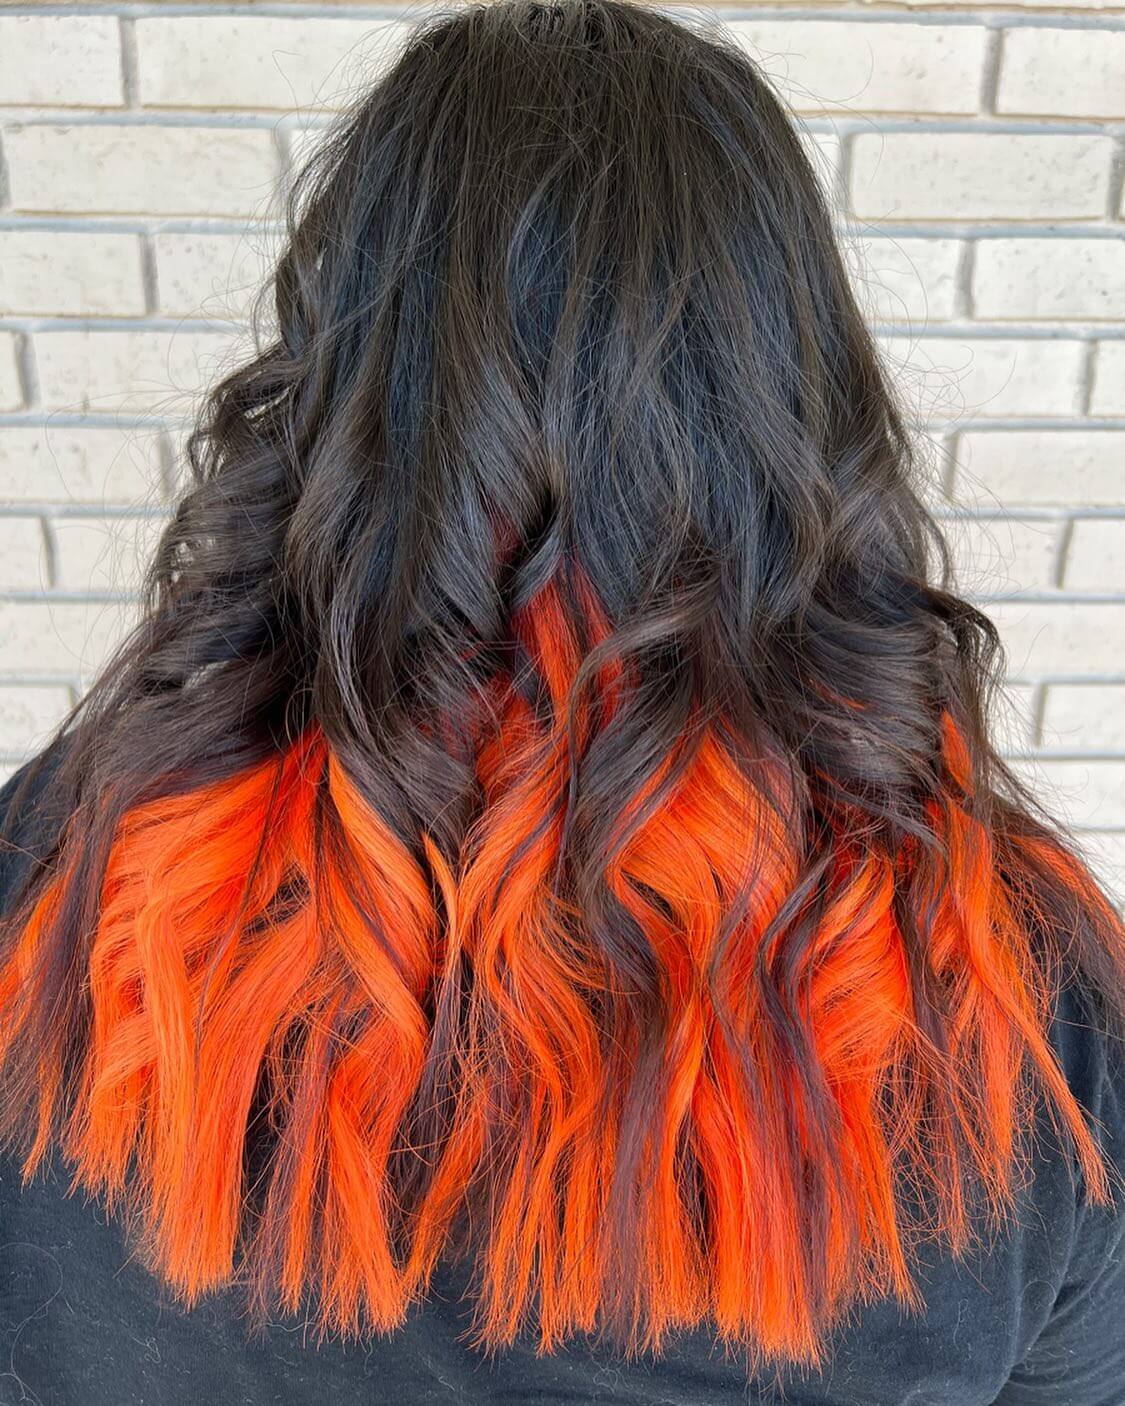 Black Hair with Orange Underneath